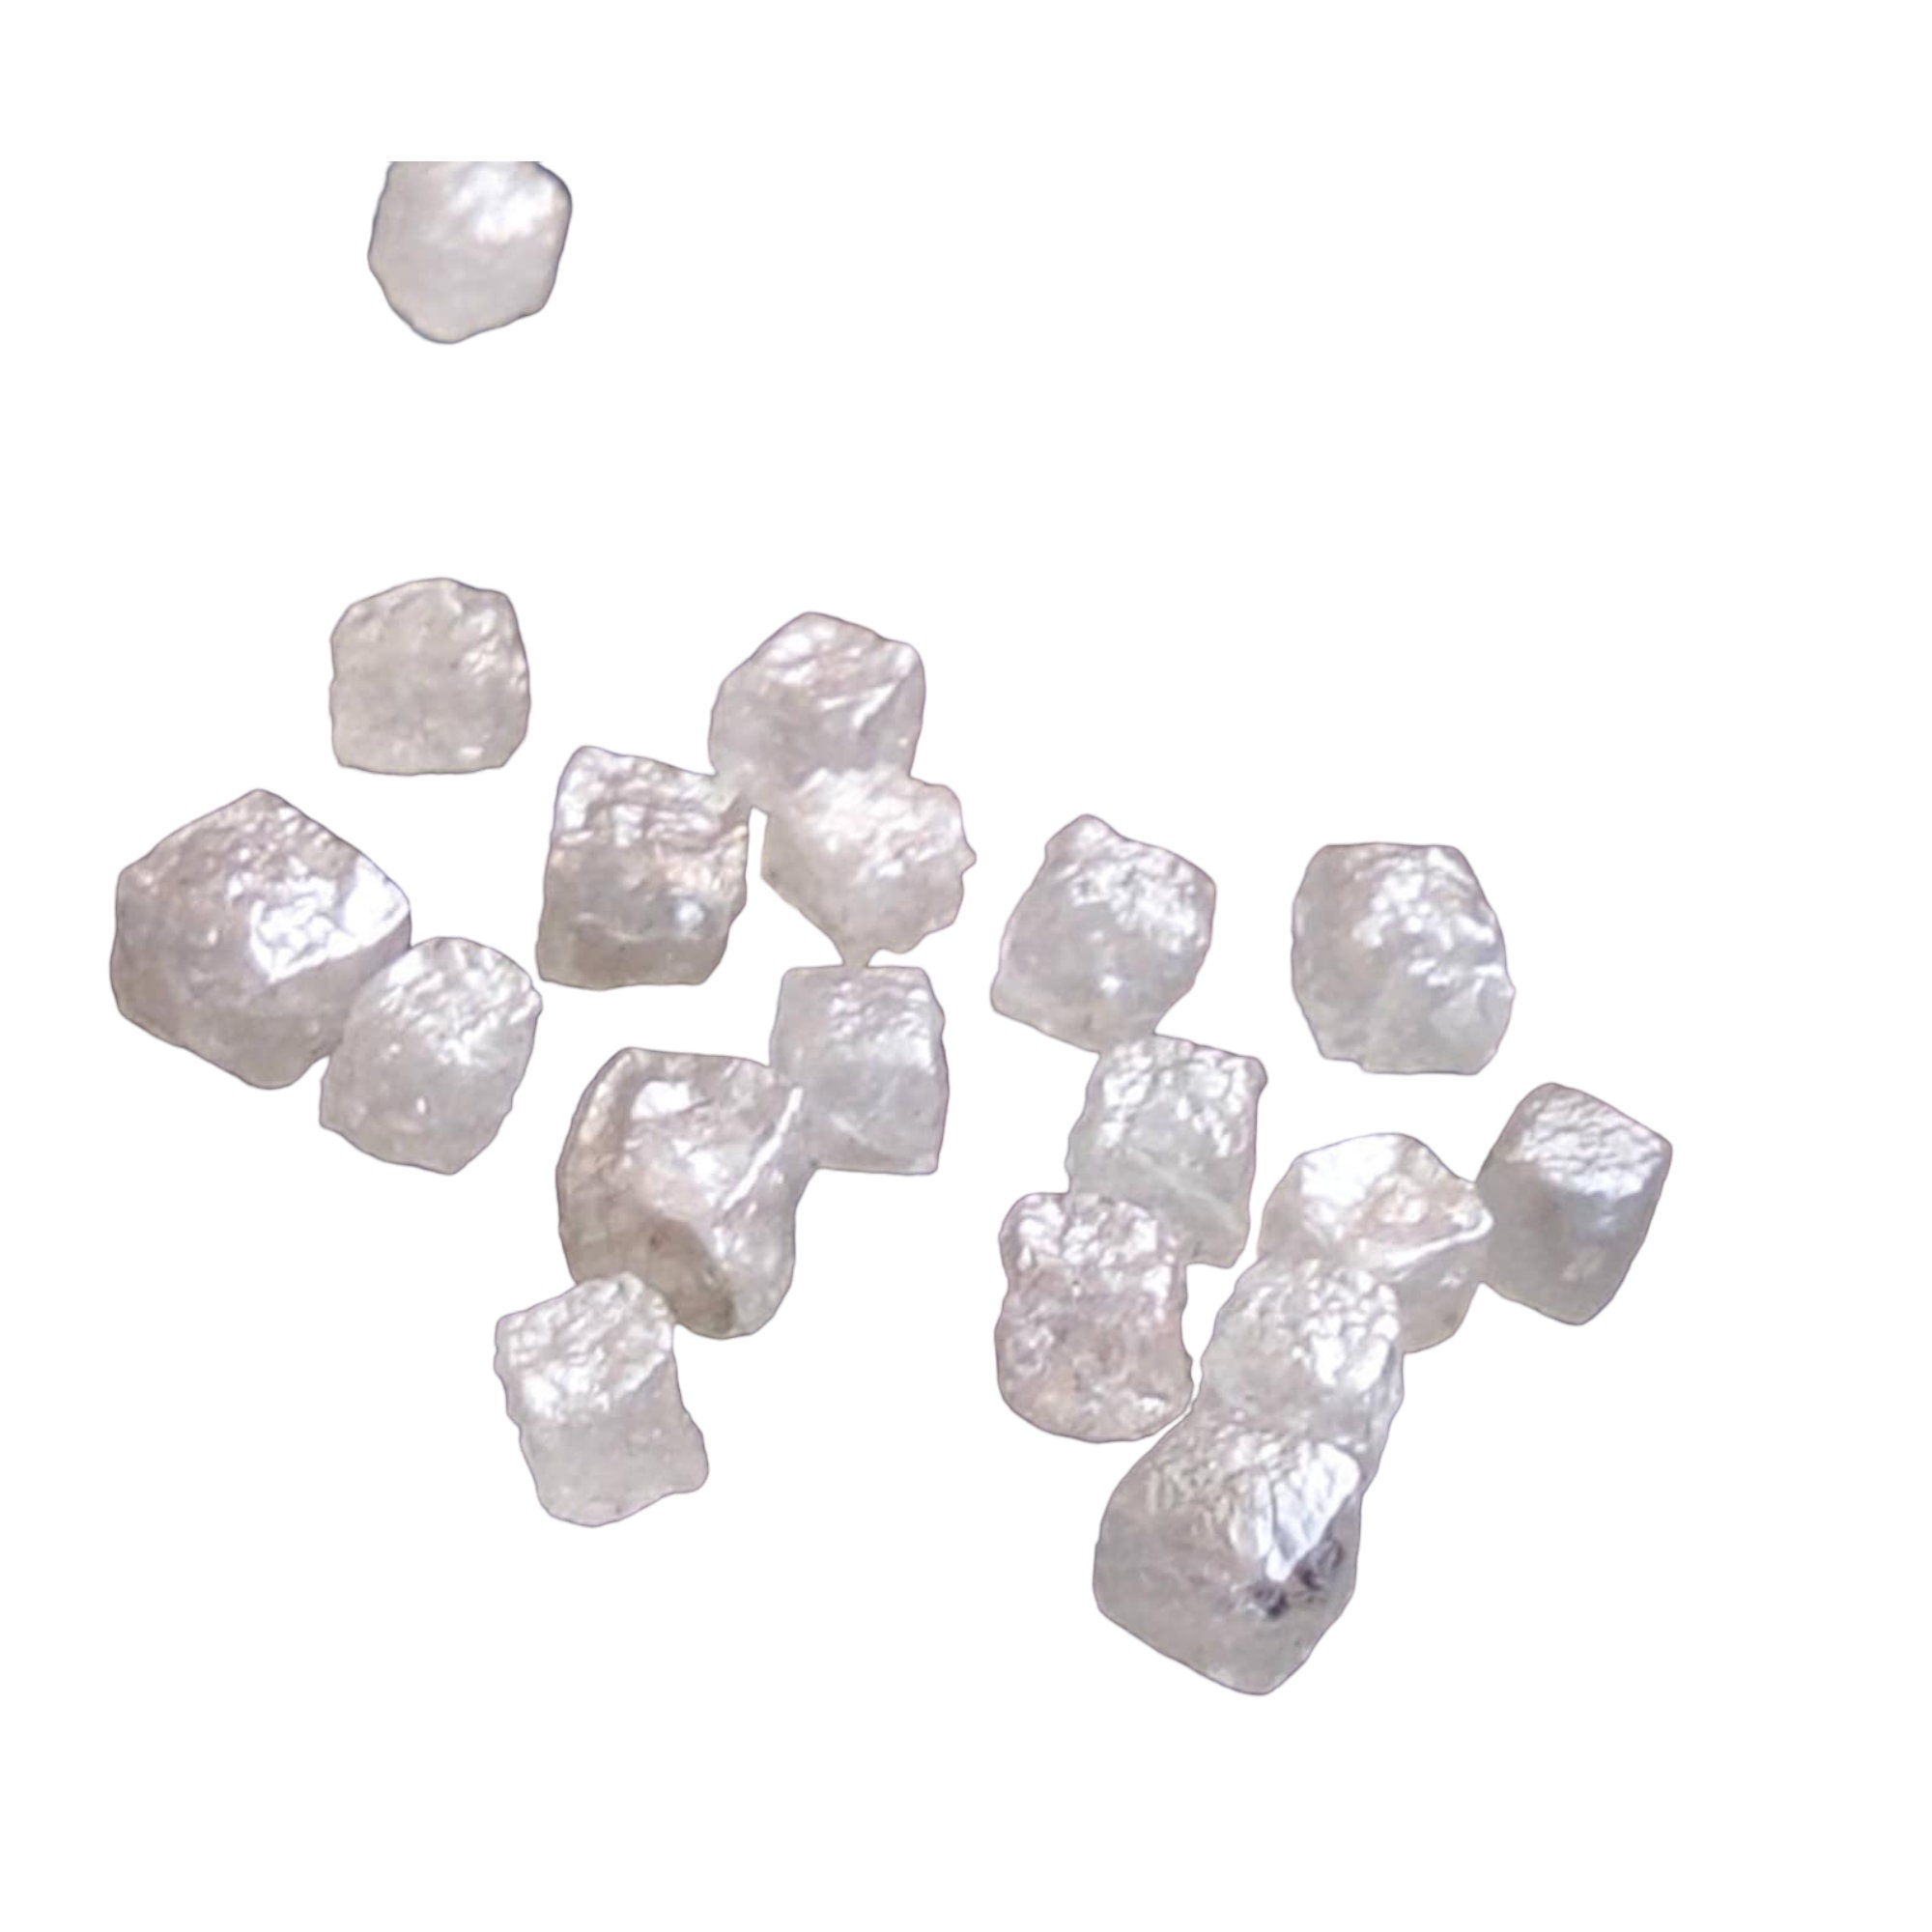 730.73 Carats 1 SUPER LARGE Raw NATURAL UNCUT ROUGH DIAMOND